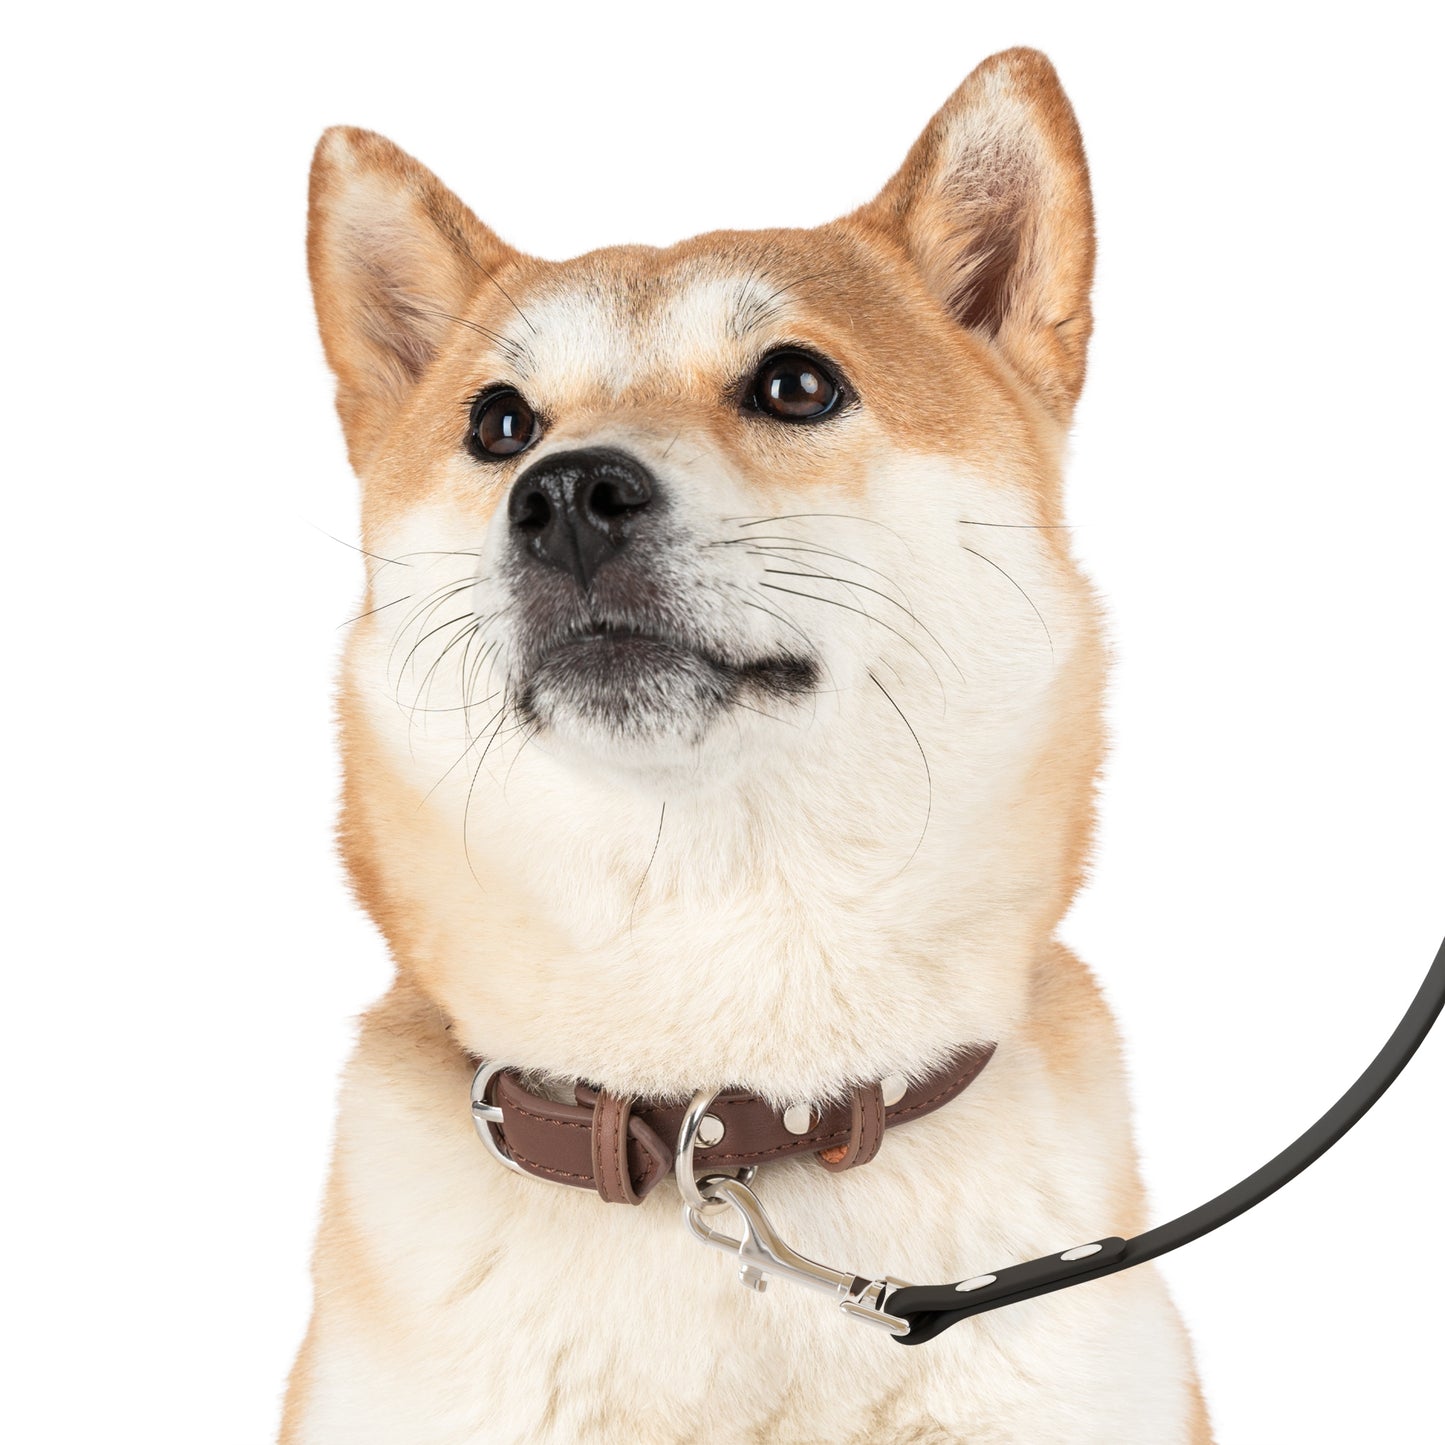 Niccie Paws & Hearts Pet Leash - Durable Dog Leash for Walks